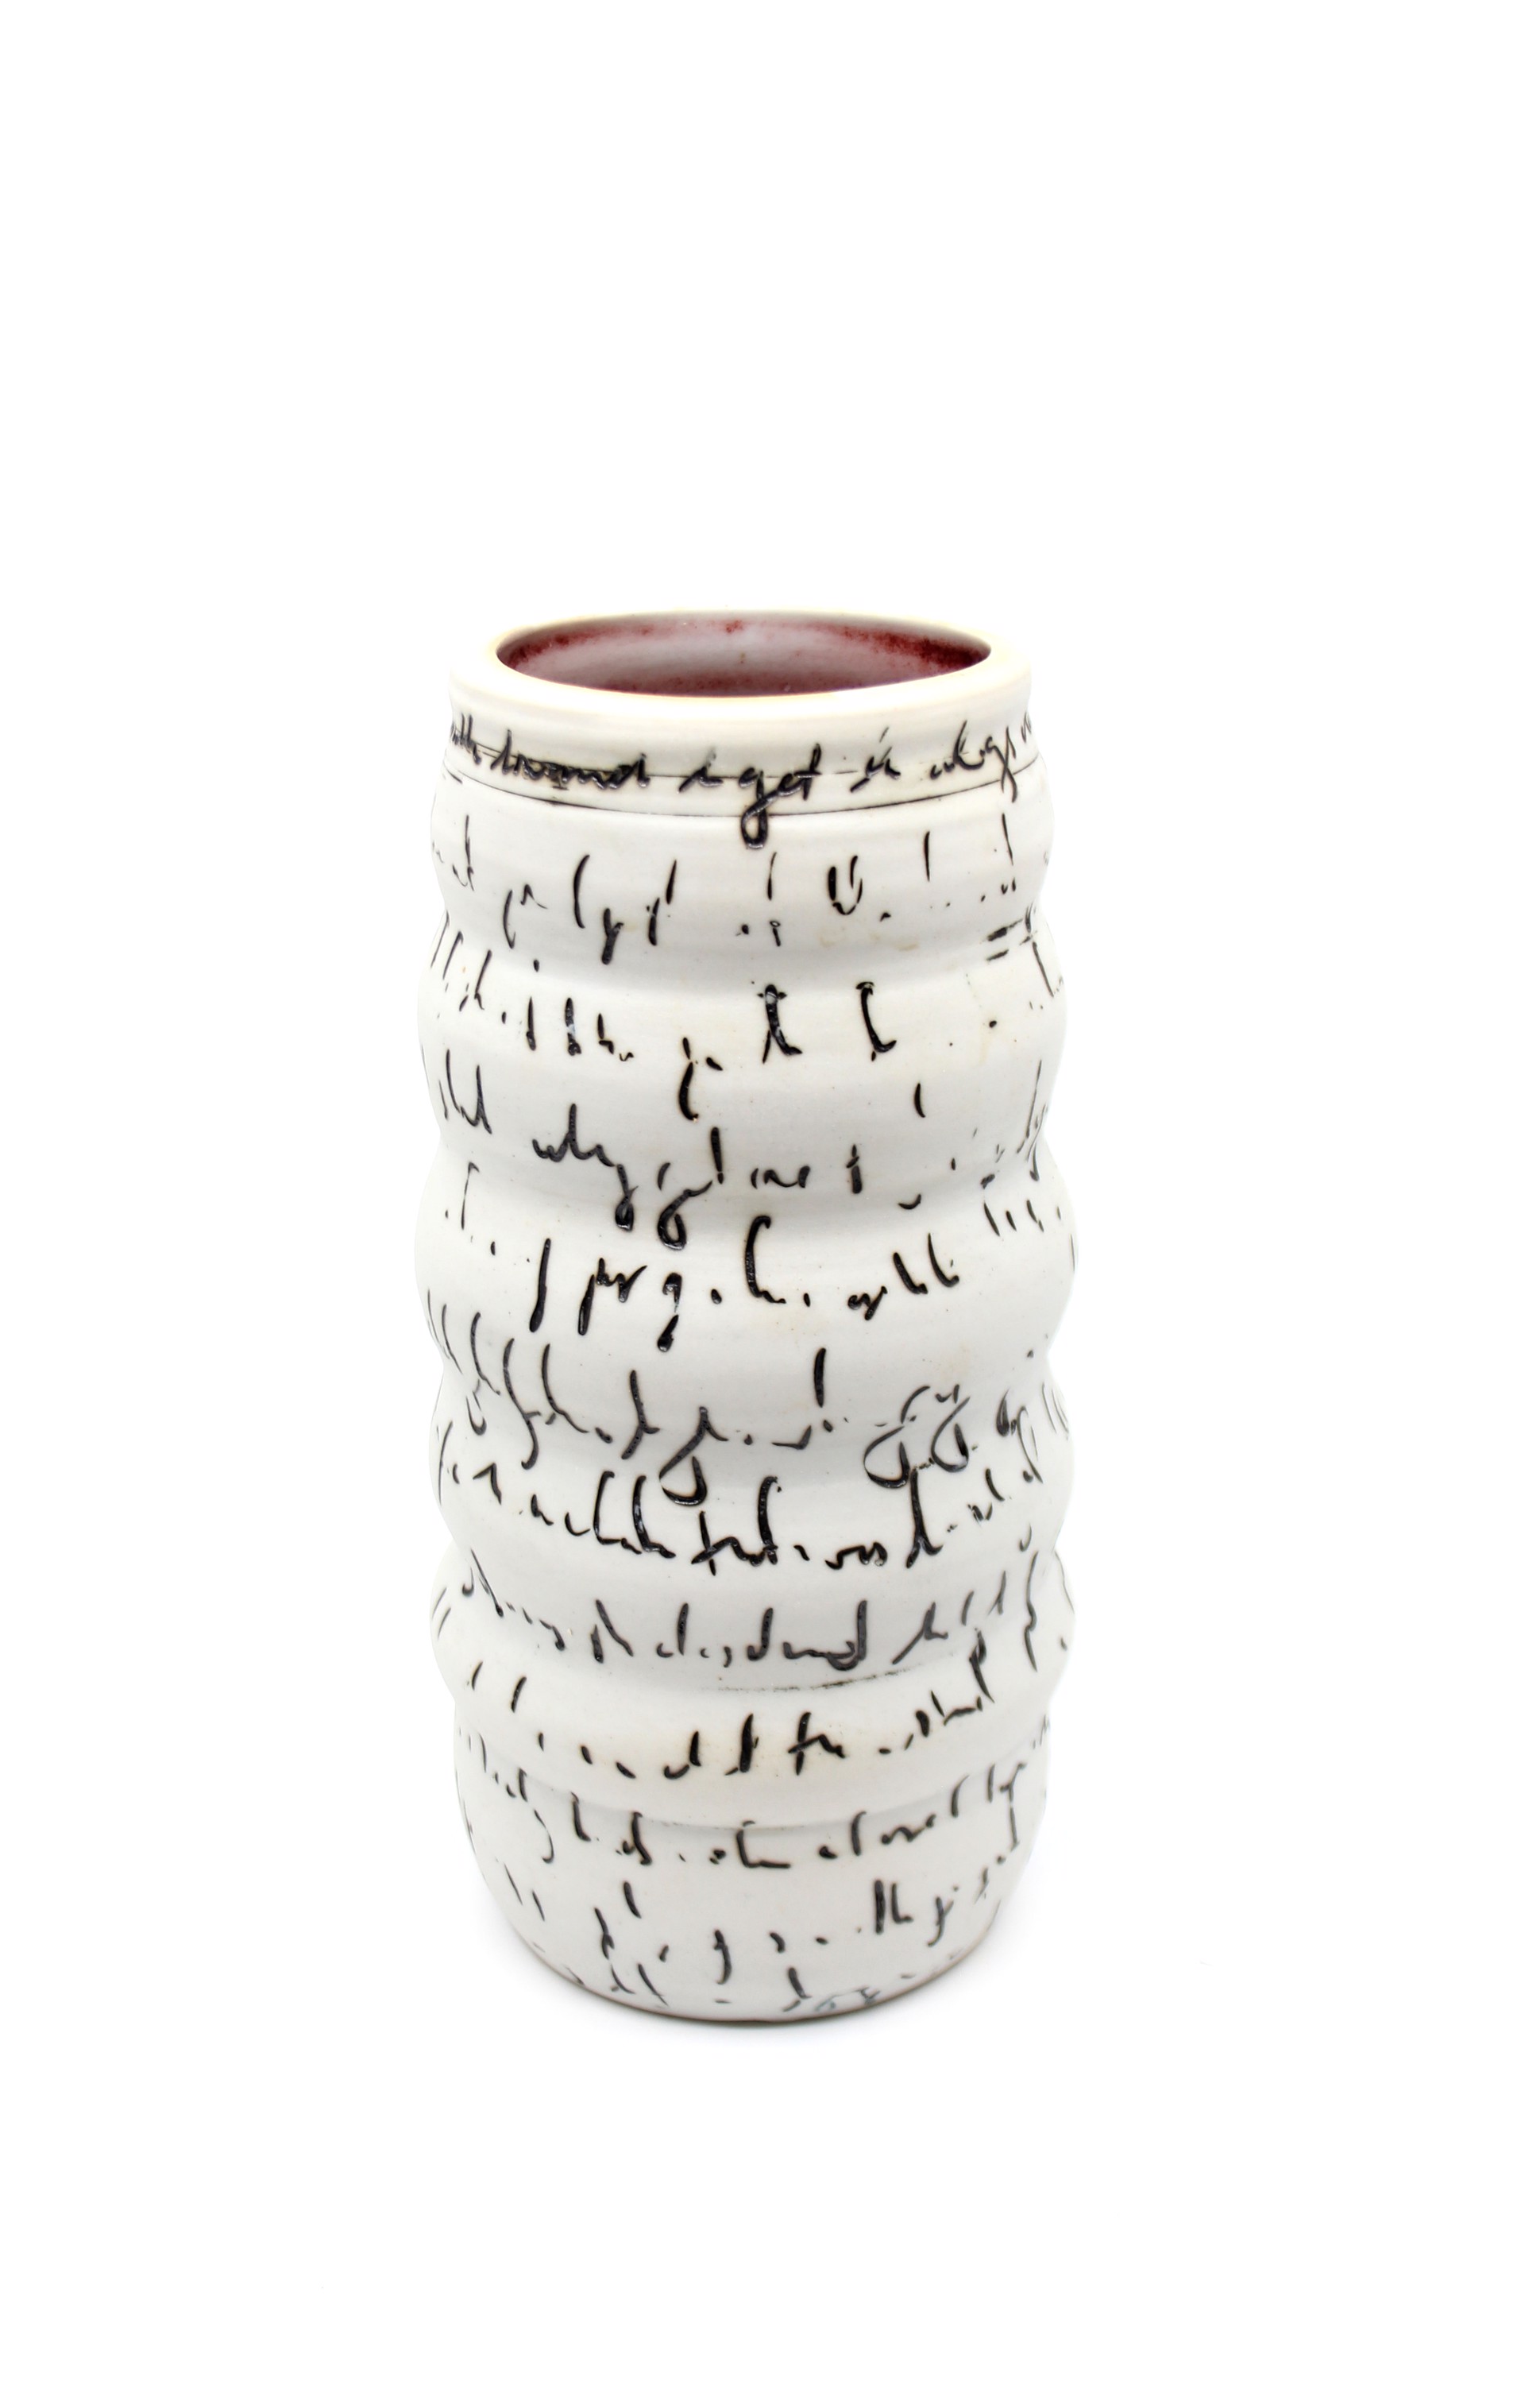 Writing Vase by Heather Bradley